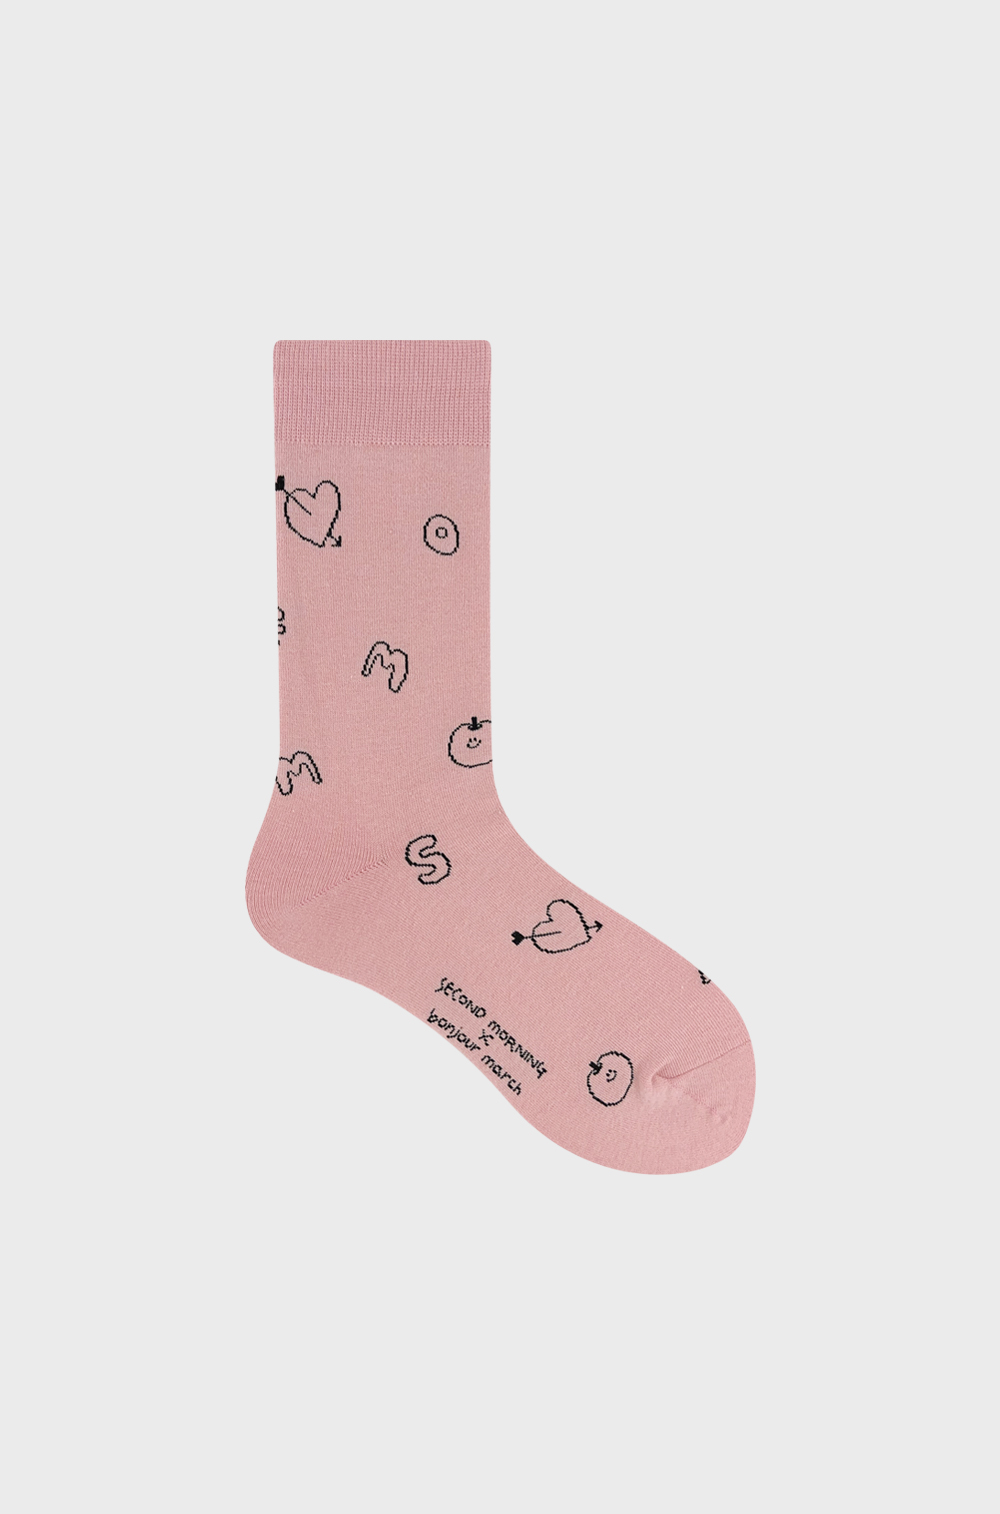 Heart socks_pink apple